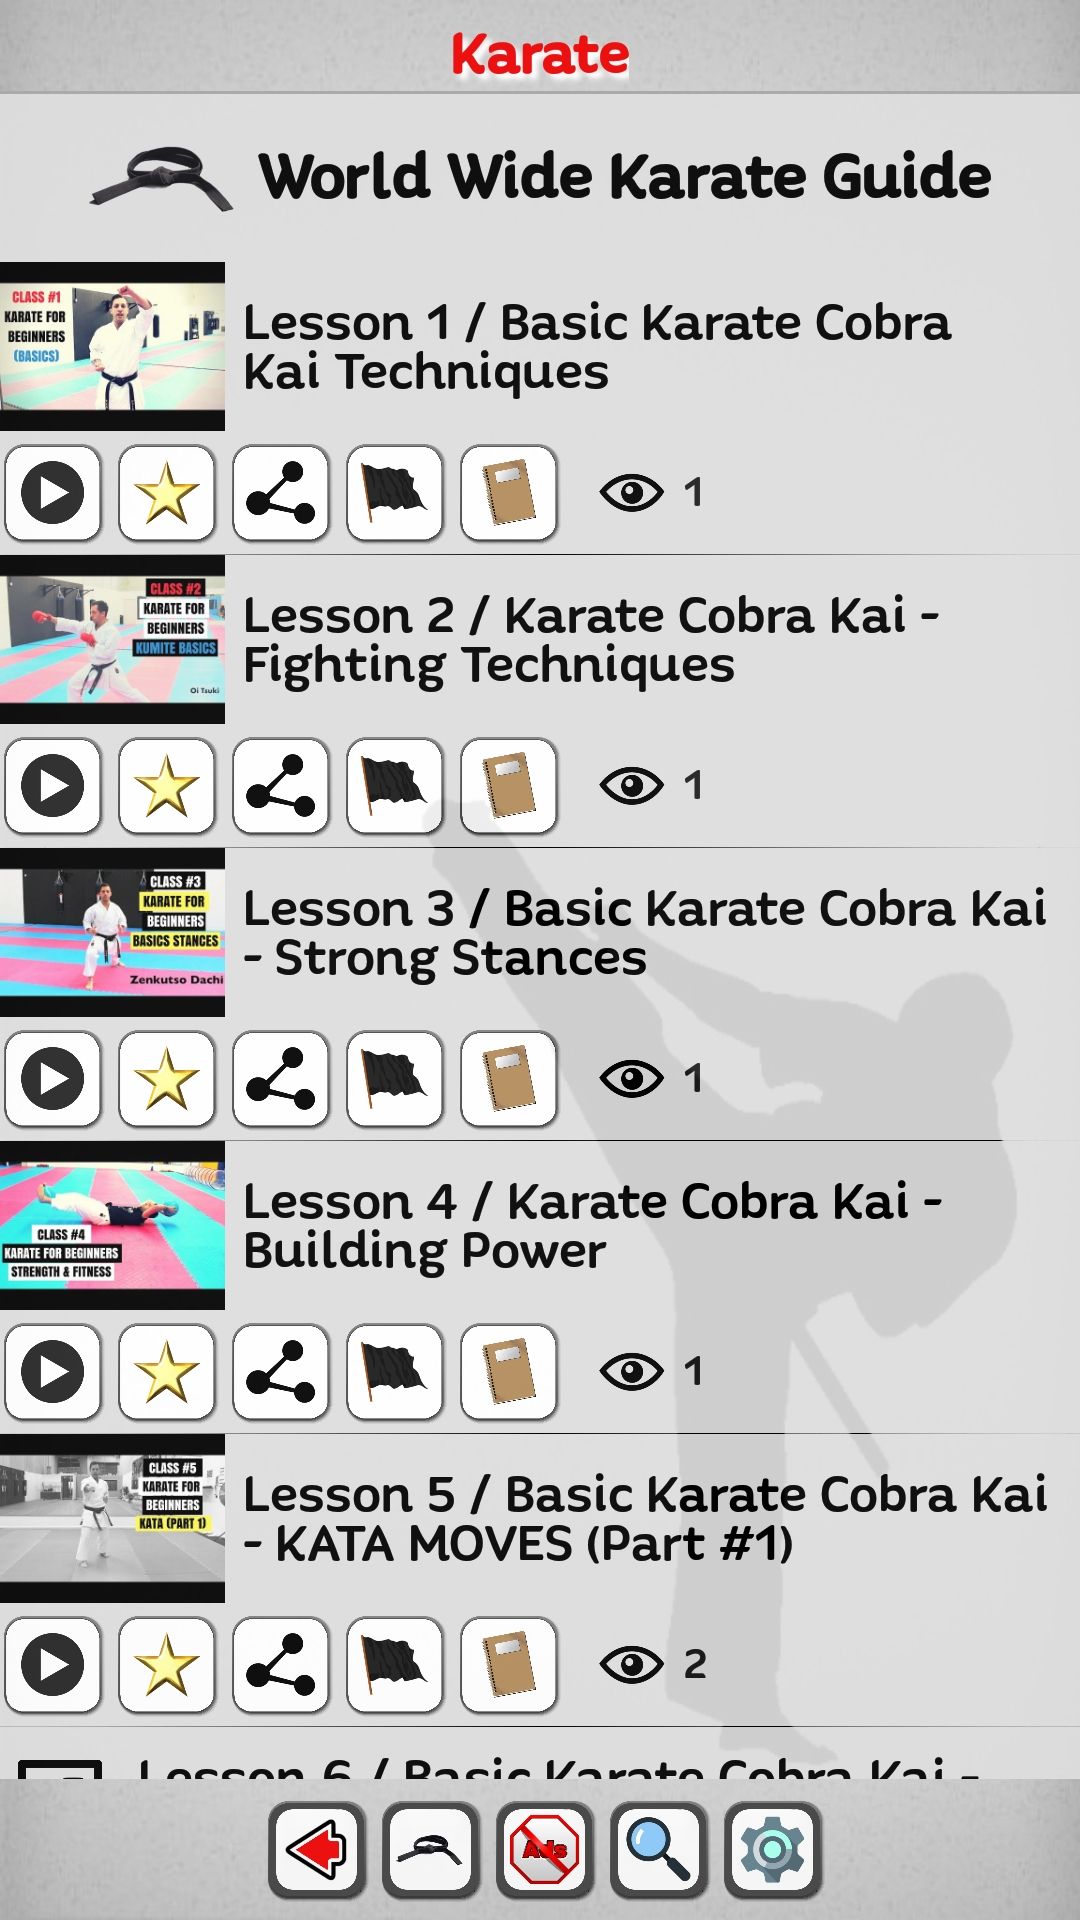 Martial Arts training karate guide mobile app